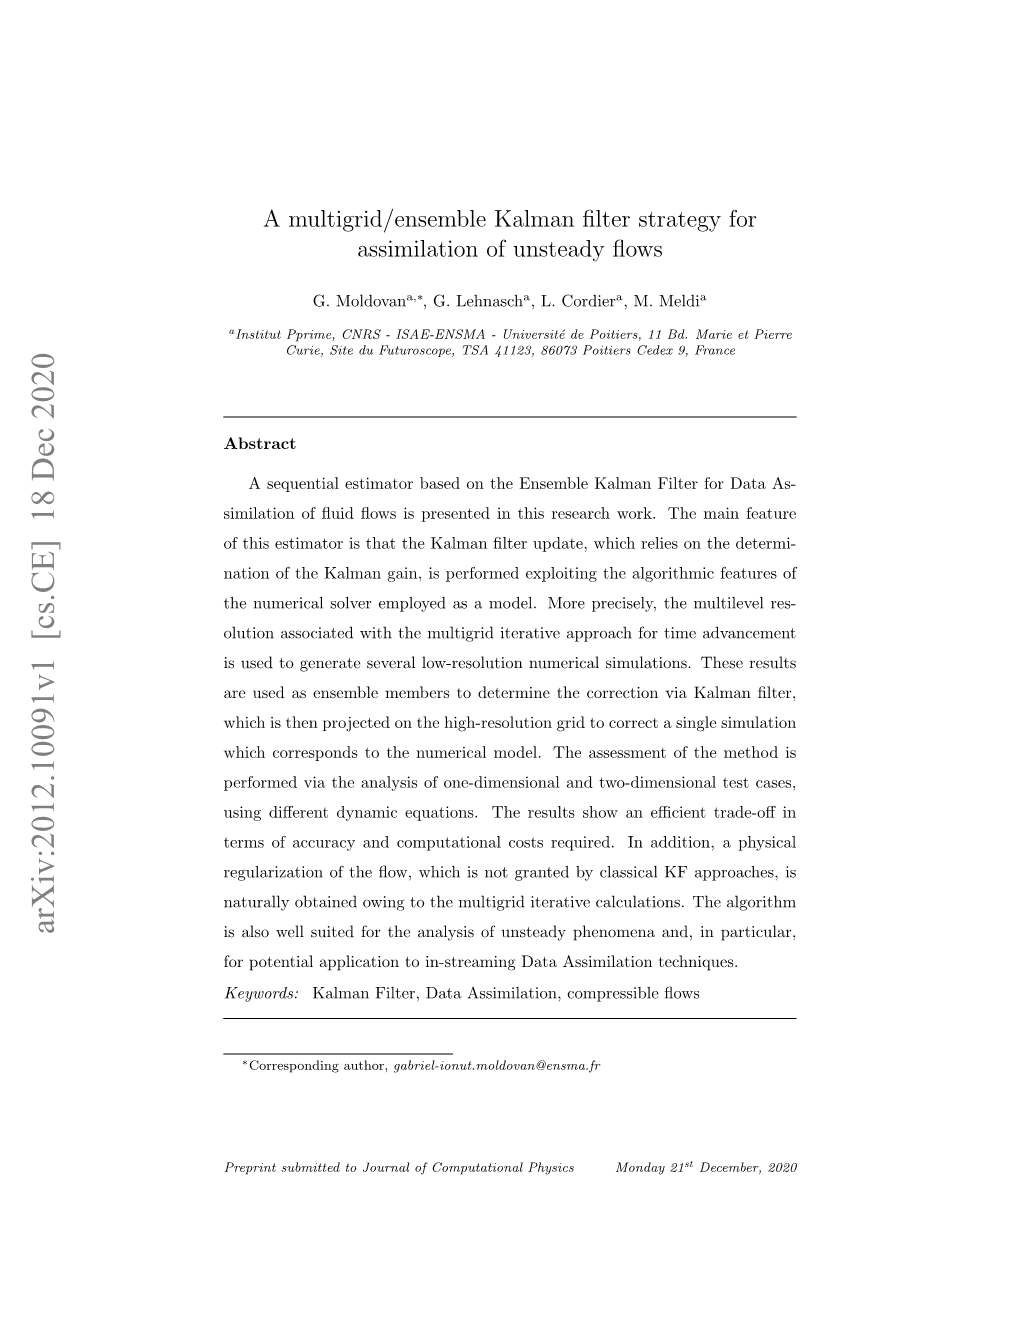 A Multigrid/Ensemble Kalman Filter Strategy for Assimilation of Unsteady